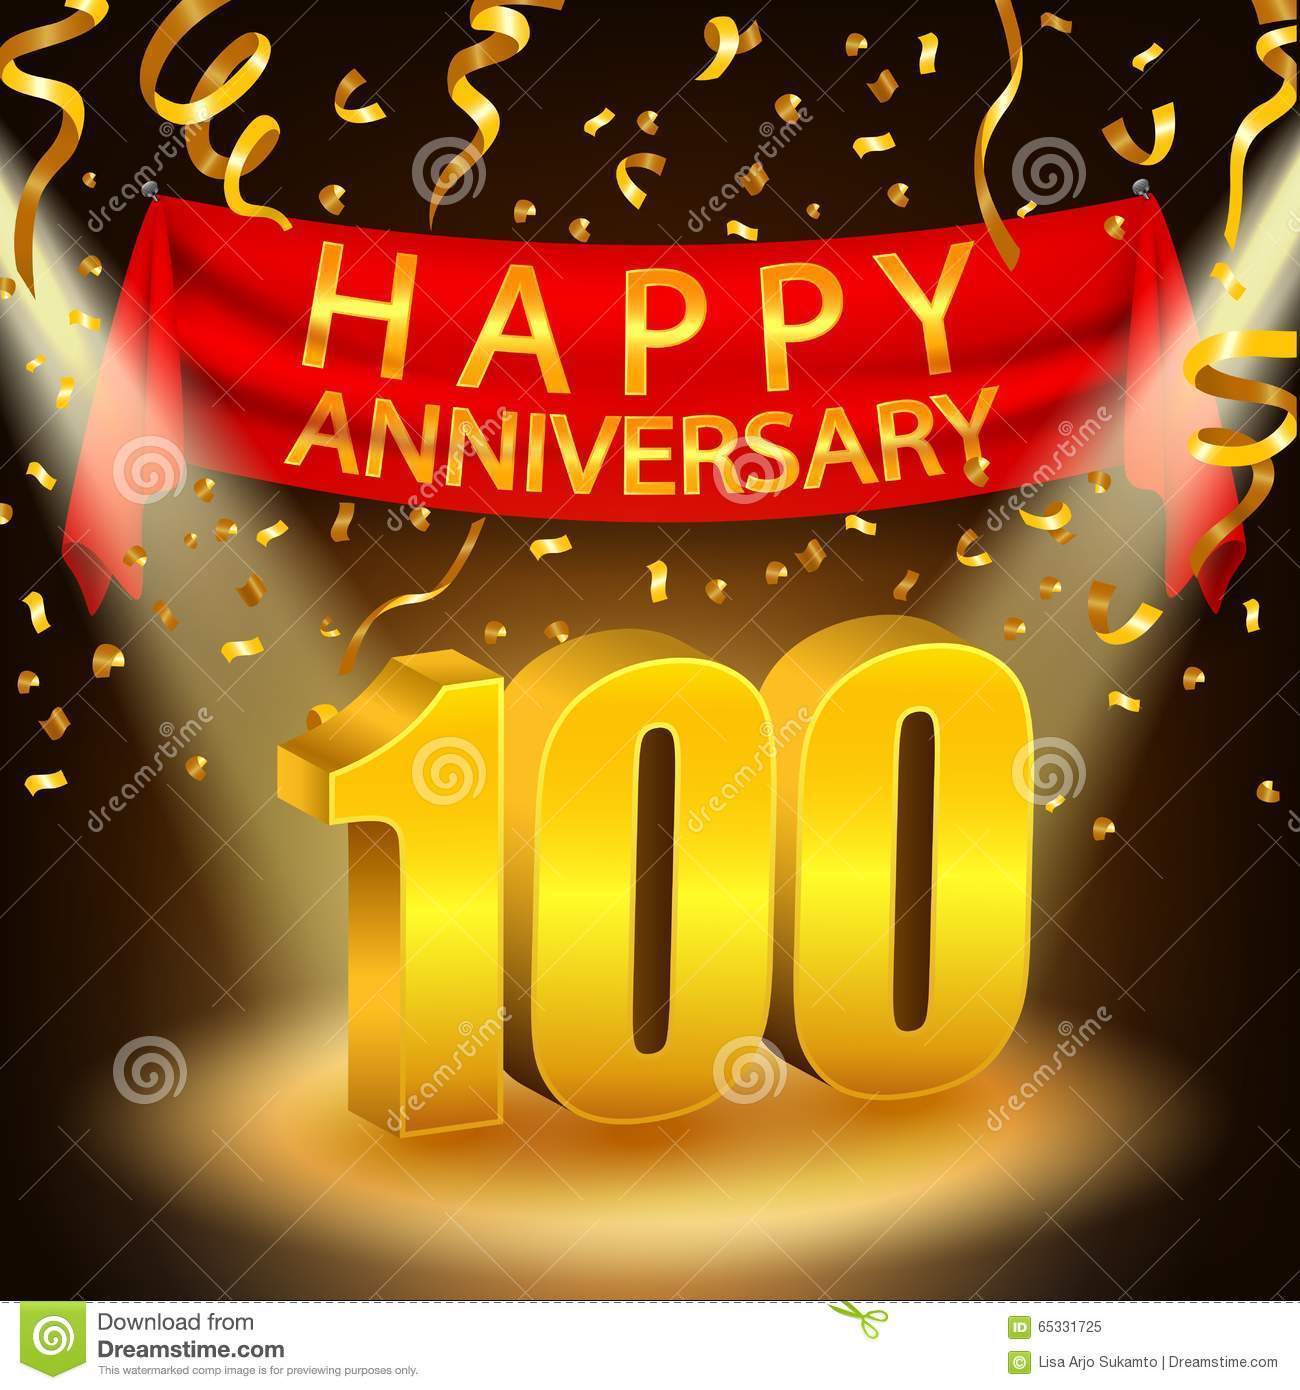 100Th Day Anniversary Gift Ideas
 Happy 100th Anniversary Celebration With Golden Confetti